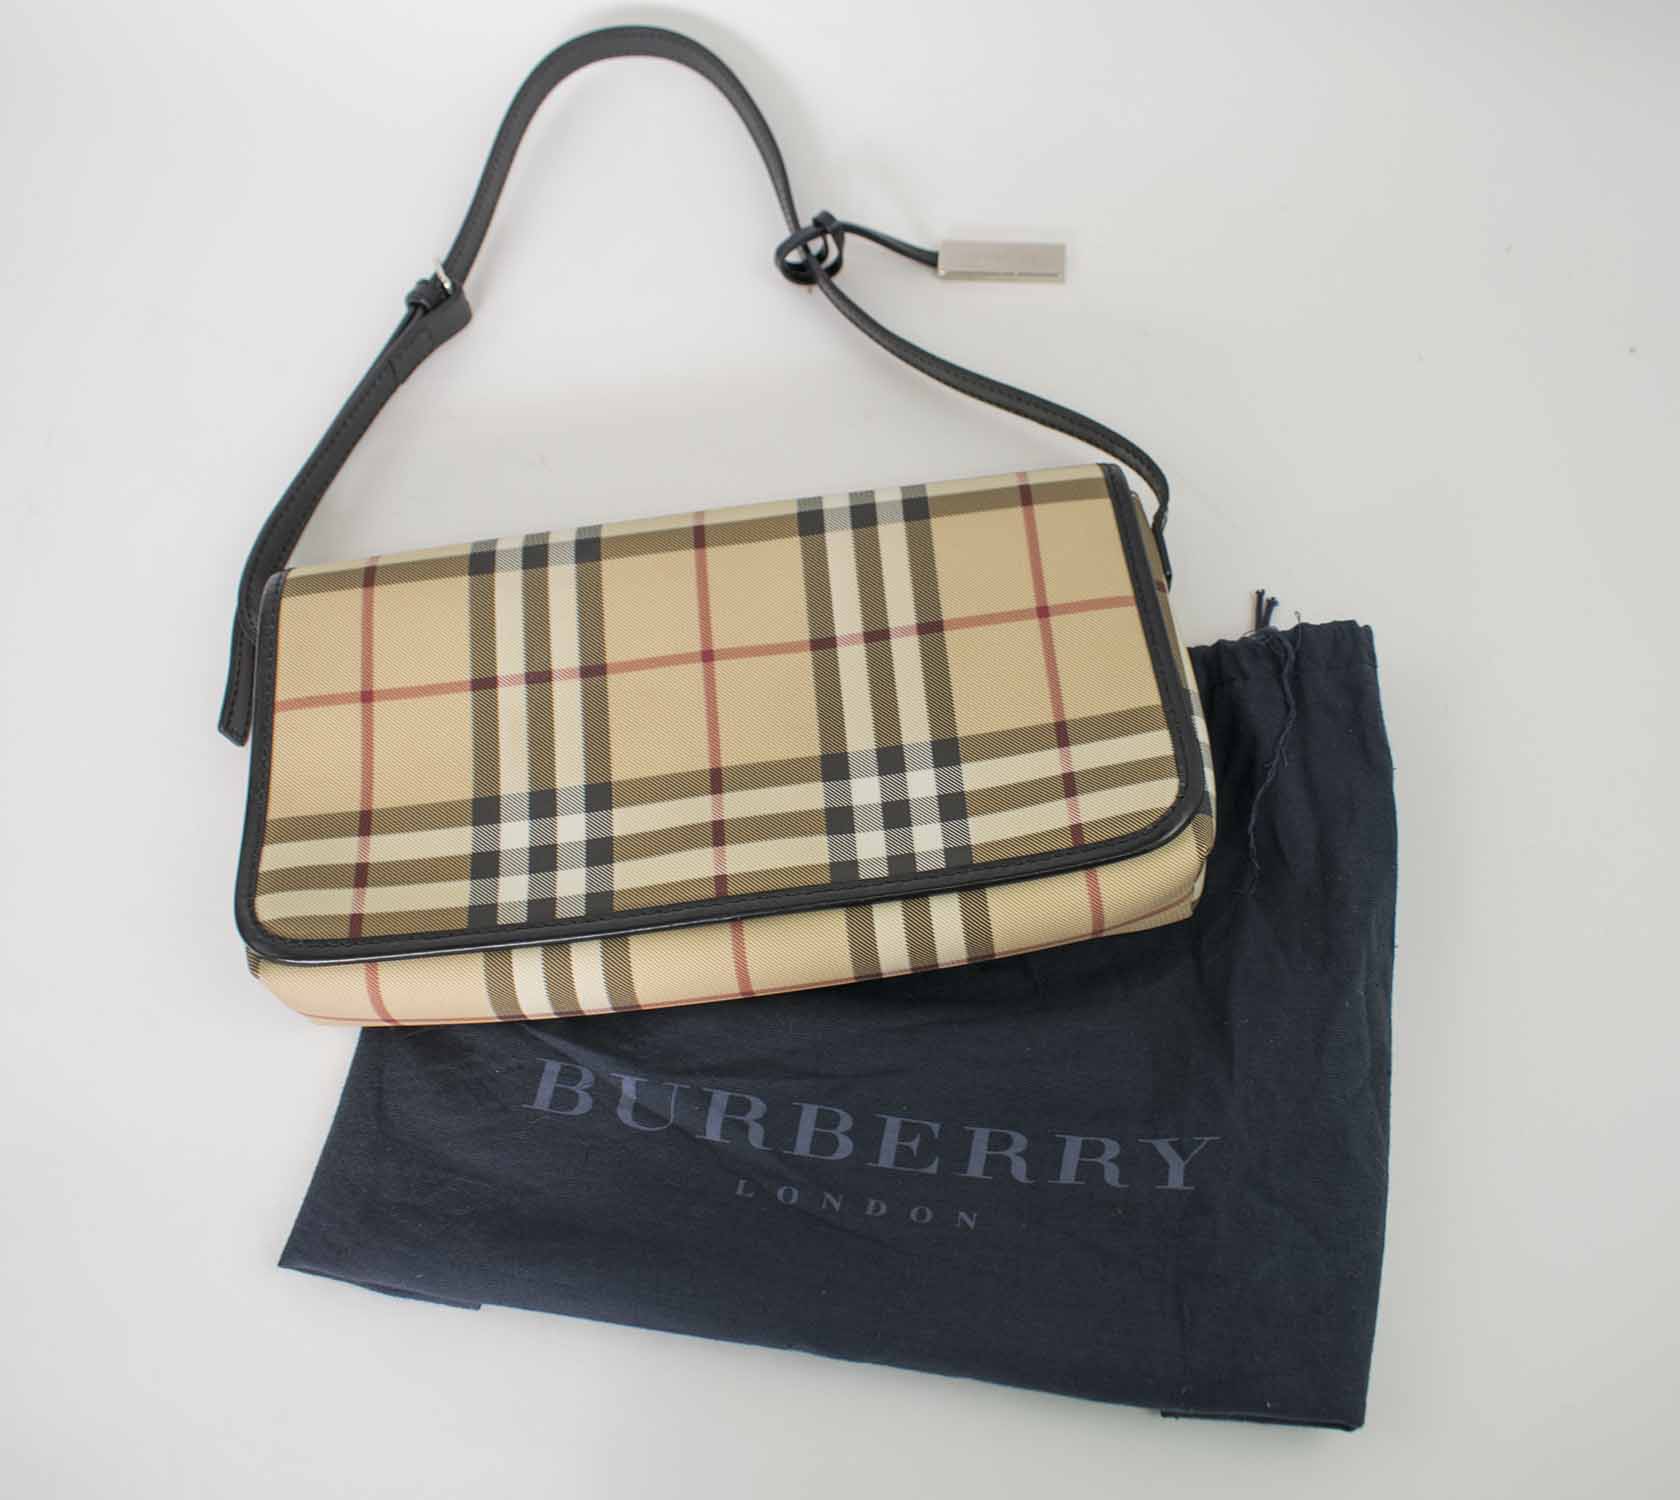 BURBERRY SHOULDER BAG, with iconic nova check pattern, black